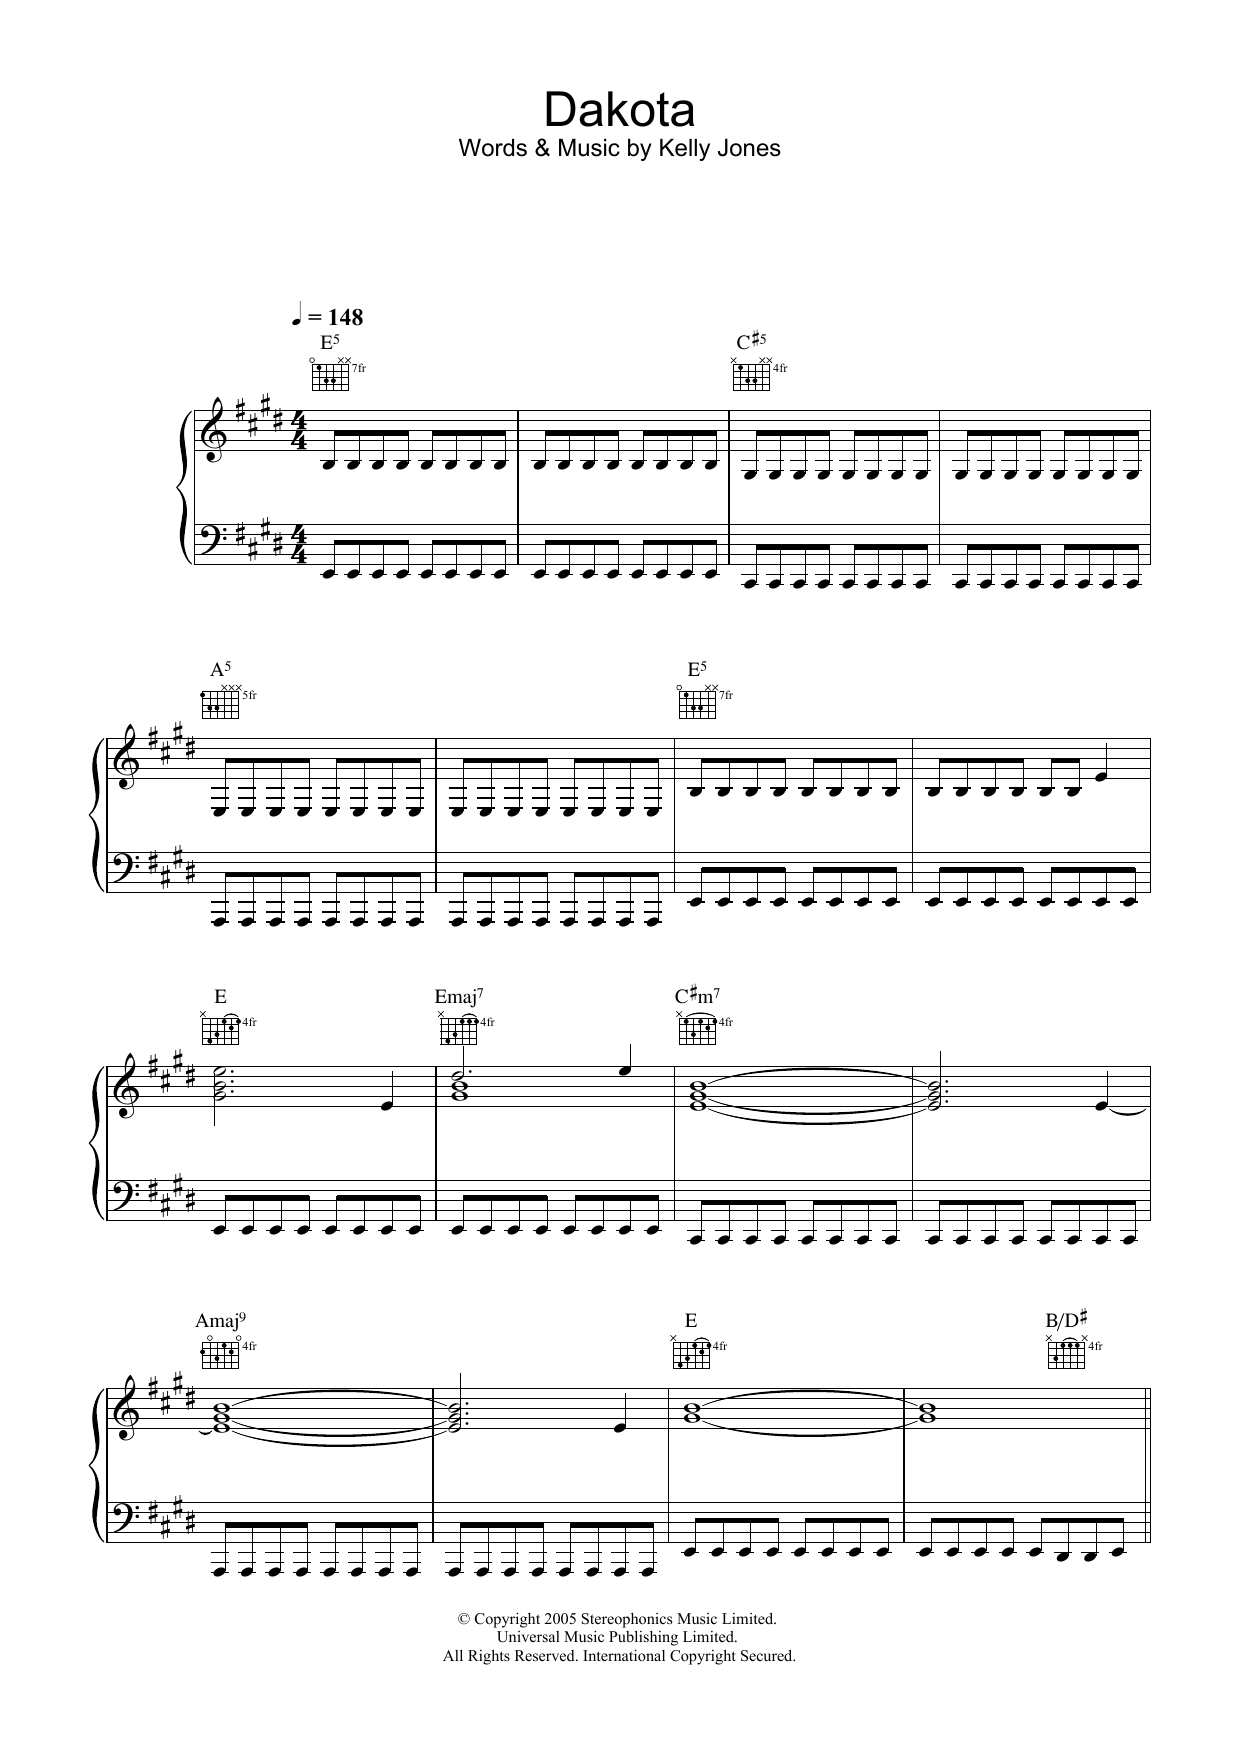 Stereophonics Dakota Sheet Music Notes & Chords for Lyrics & Chords - Download or Print PDF